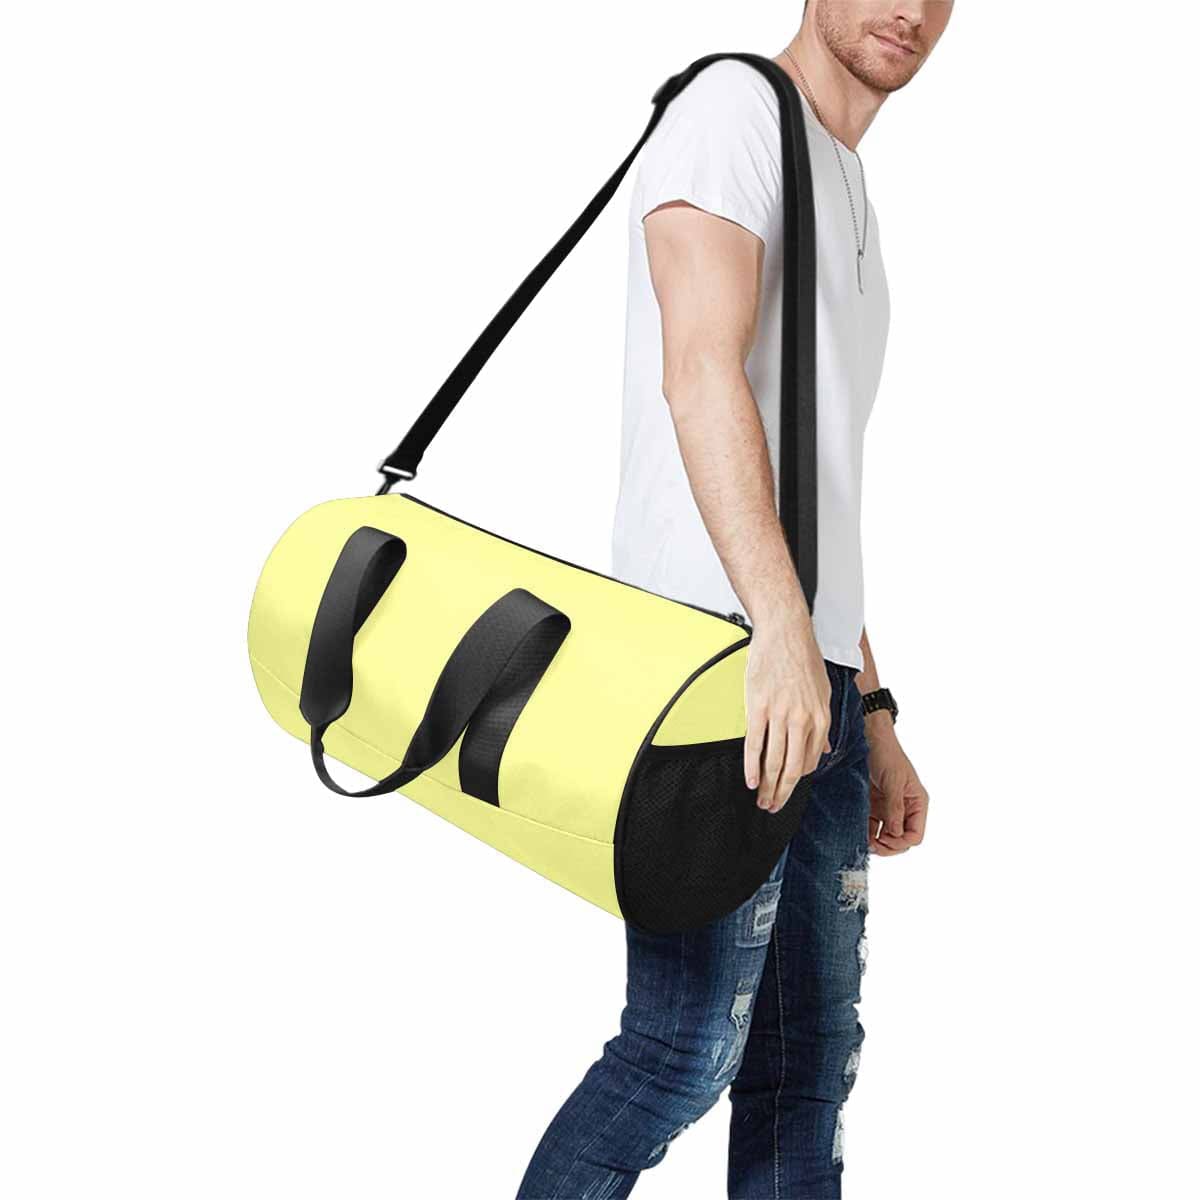 Travel Duffel Bag Pastel Yellow Carry On - Bags | Duffel Bags